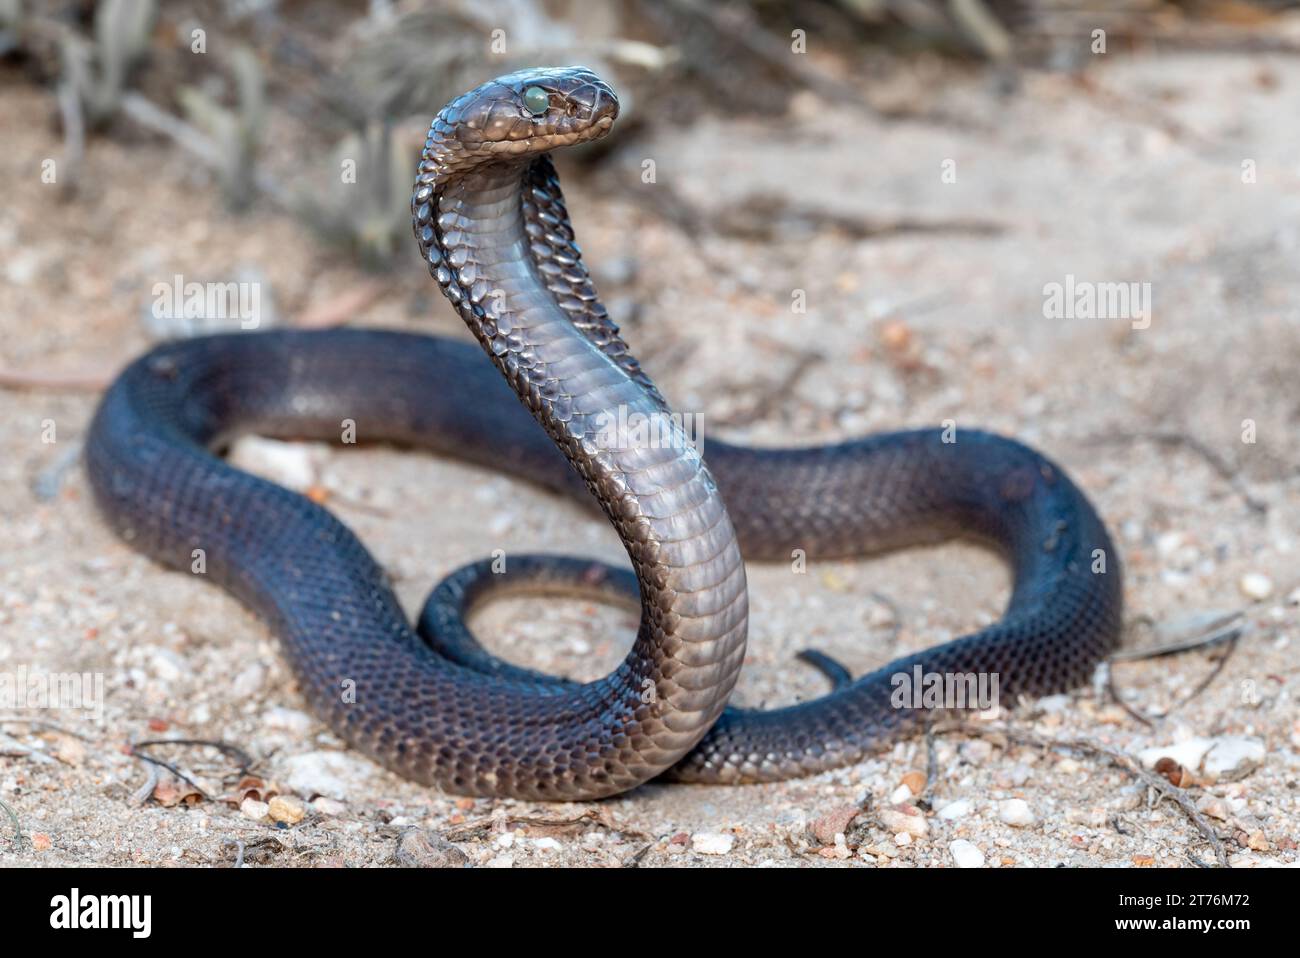 A Cape Cobra (Naja nivea), a highly venomous snake from South Africa Stock Photo